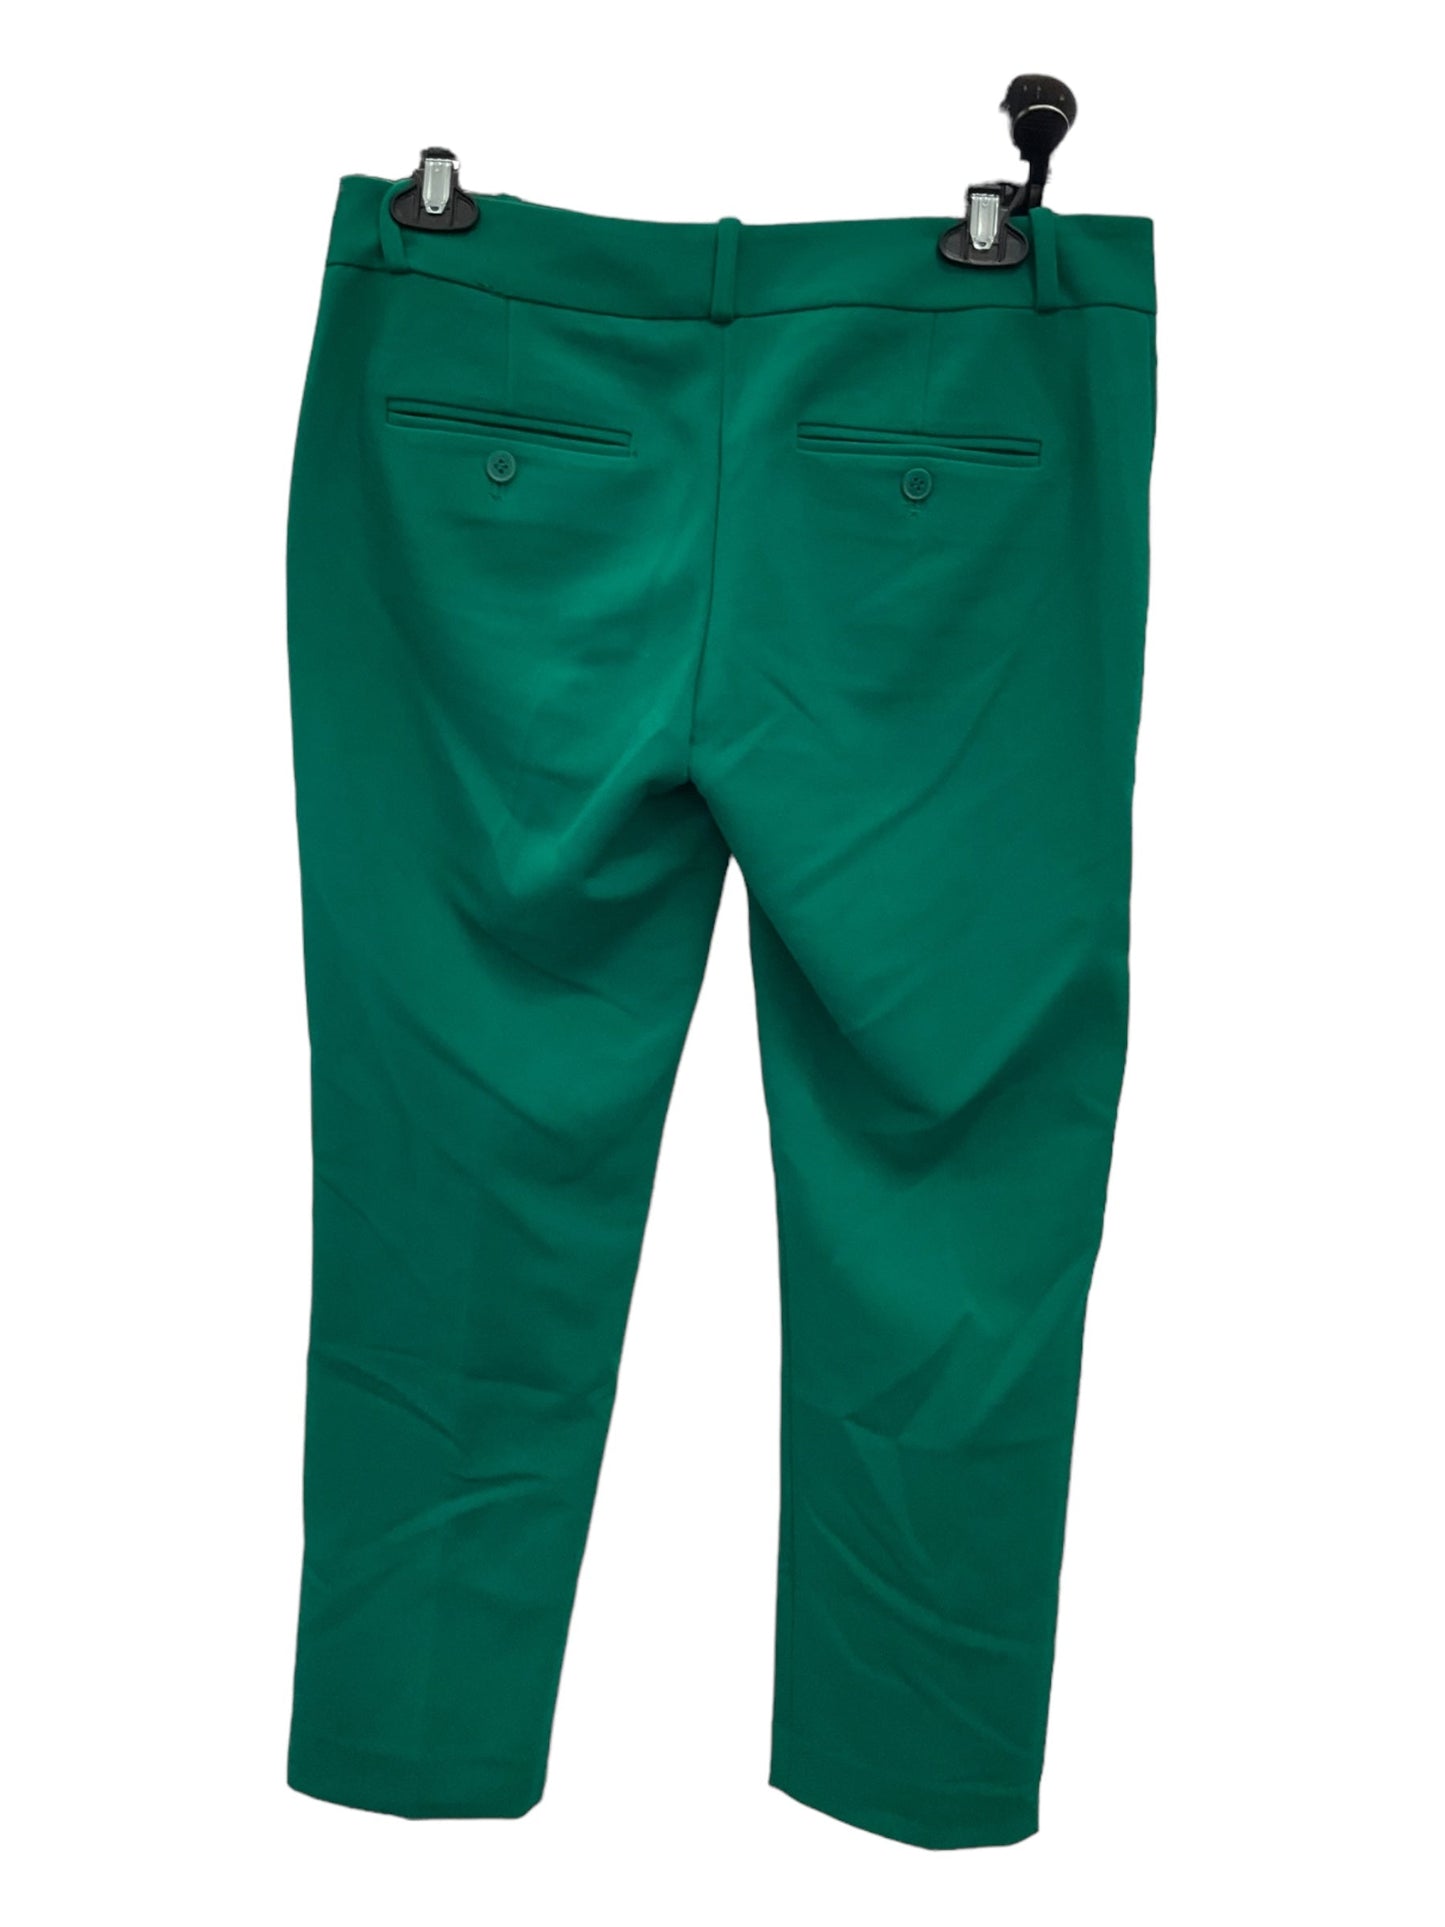 Green Pants Dress Limited, Size 6